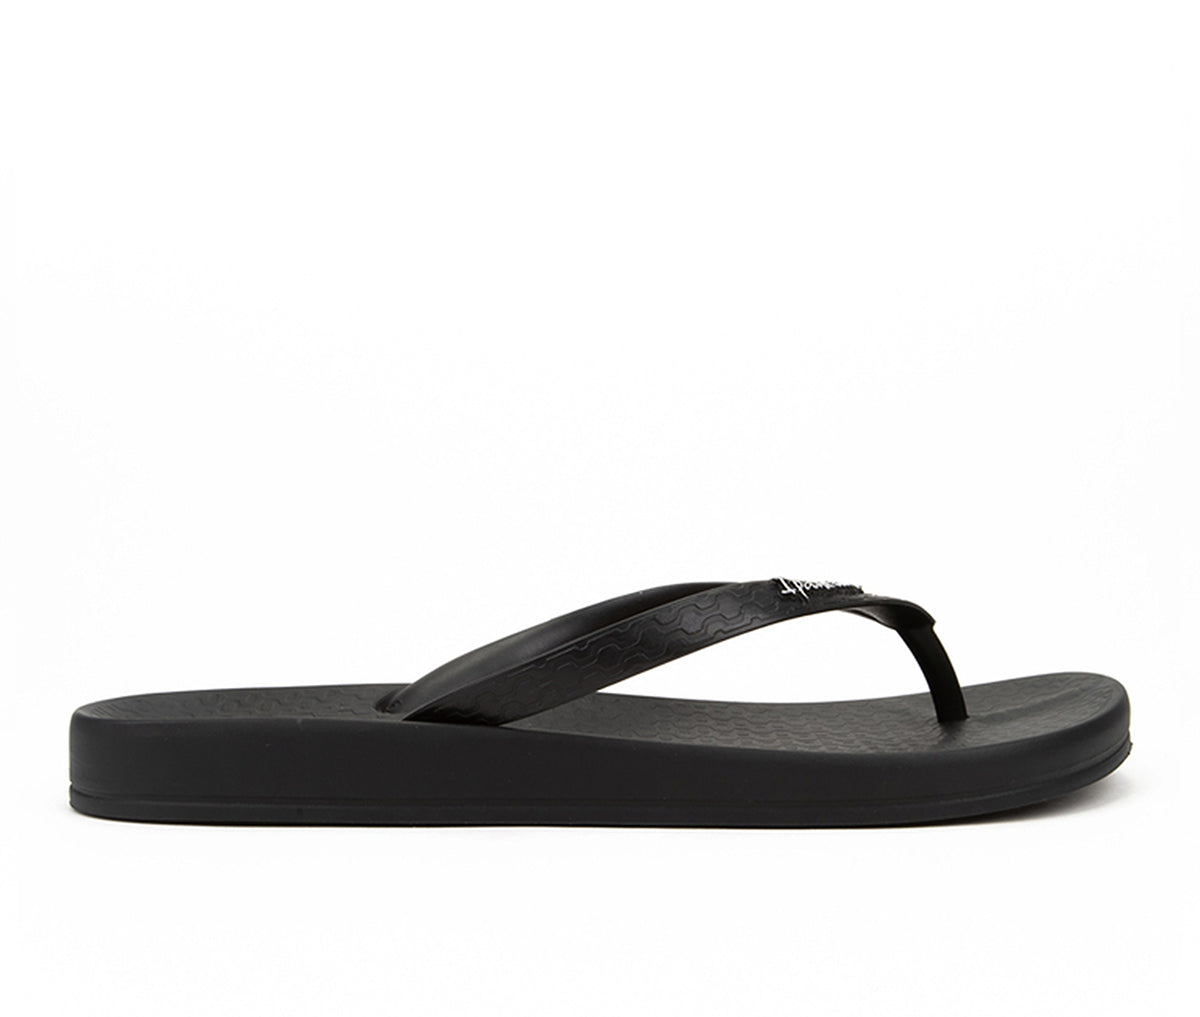 Side view of a black Ipanema Ana Tan Flip flop.